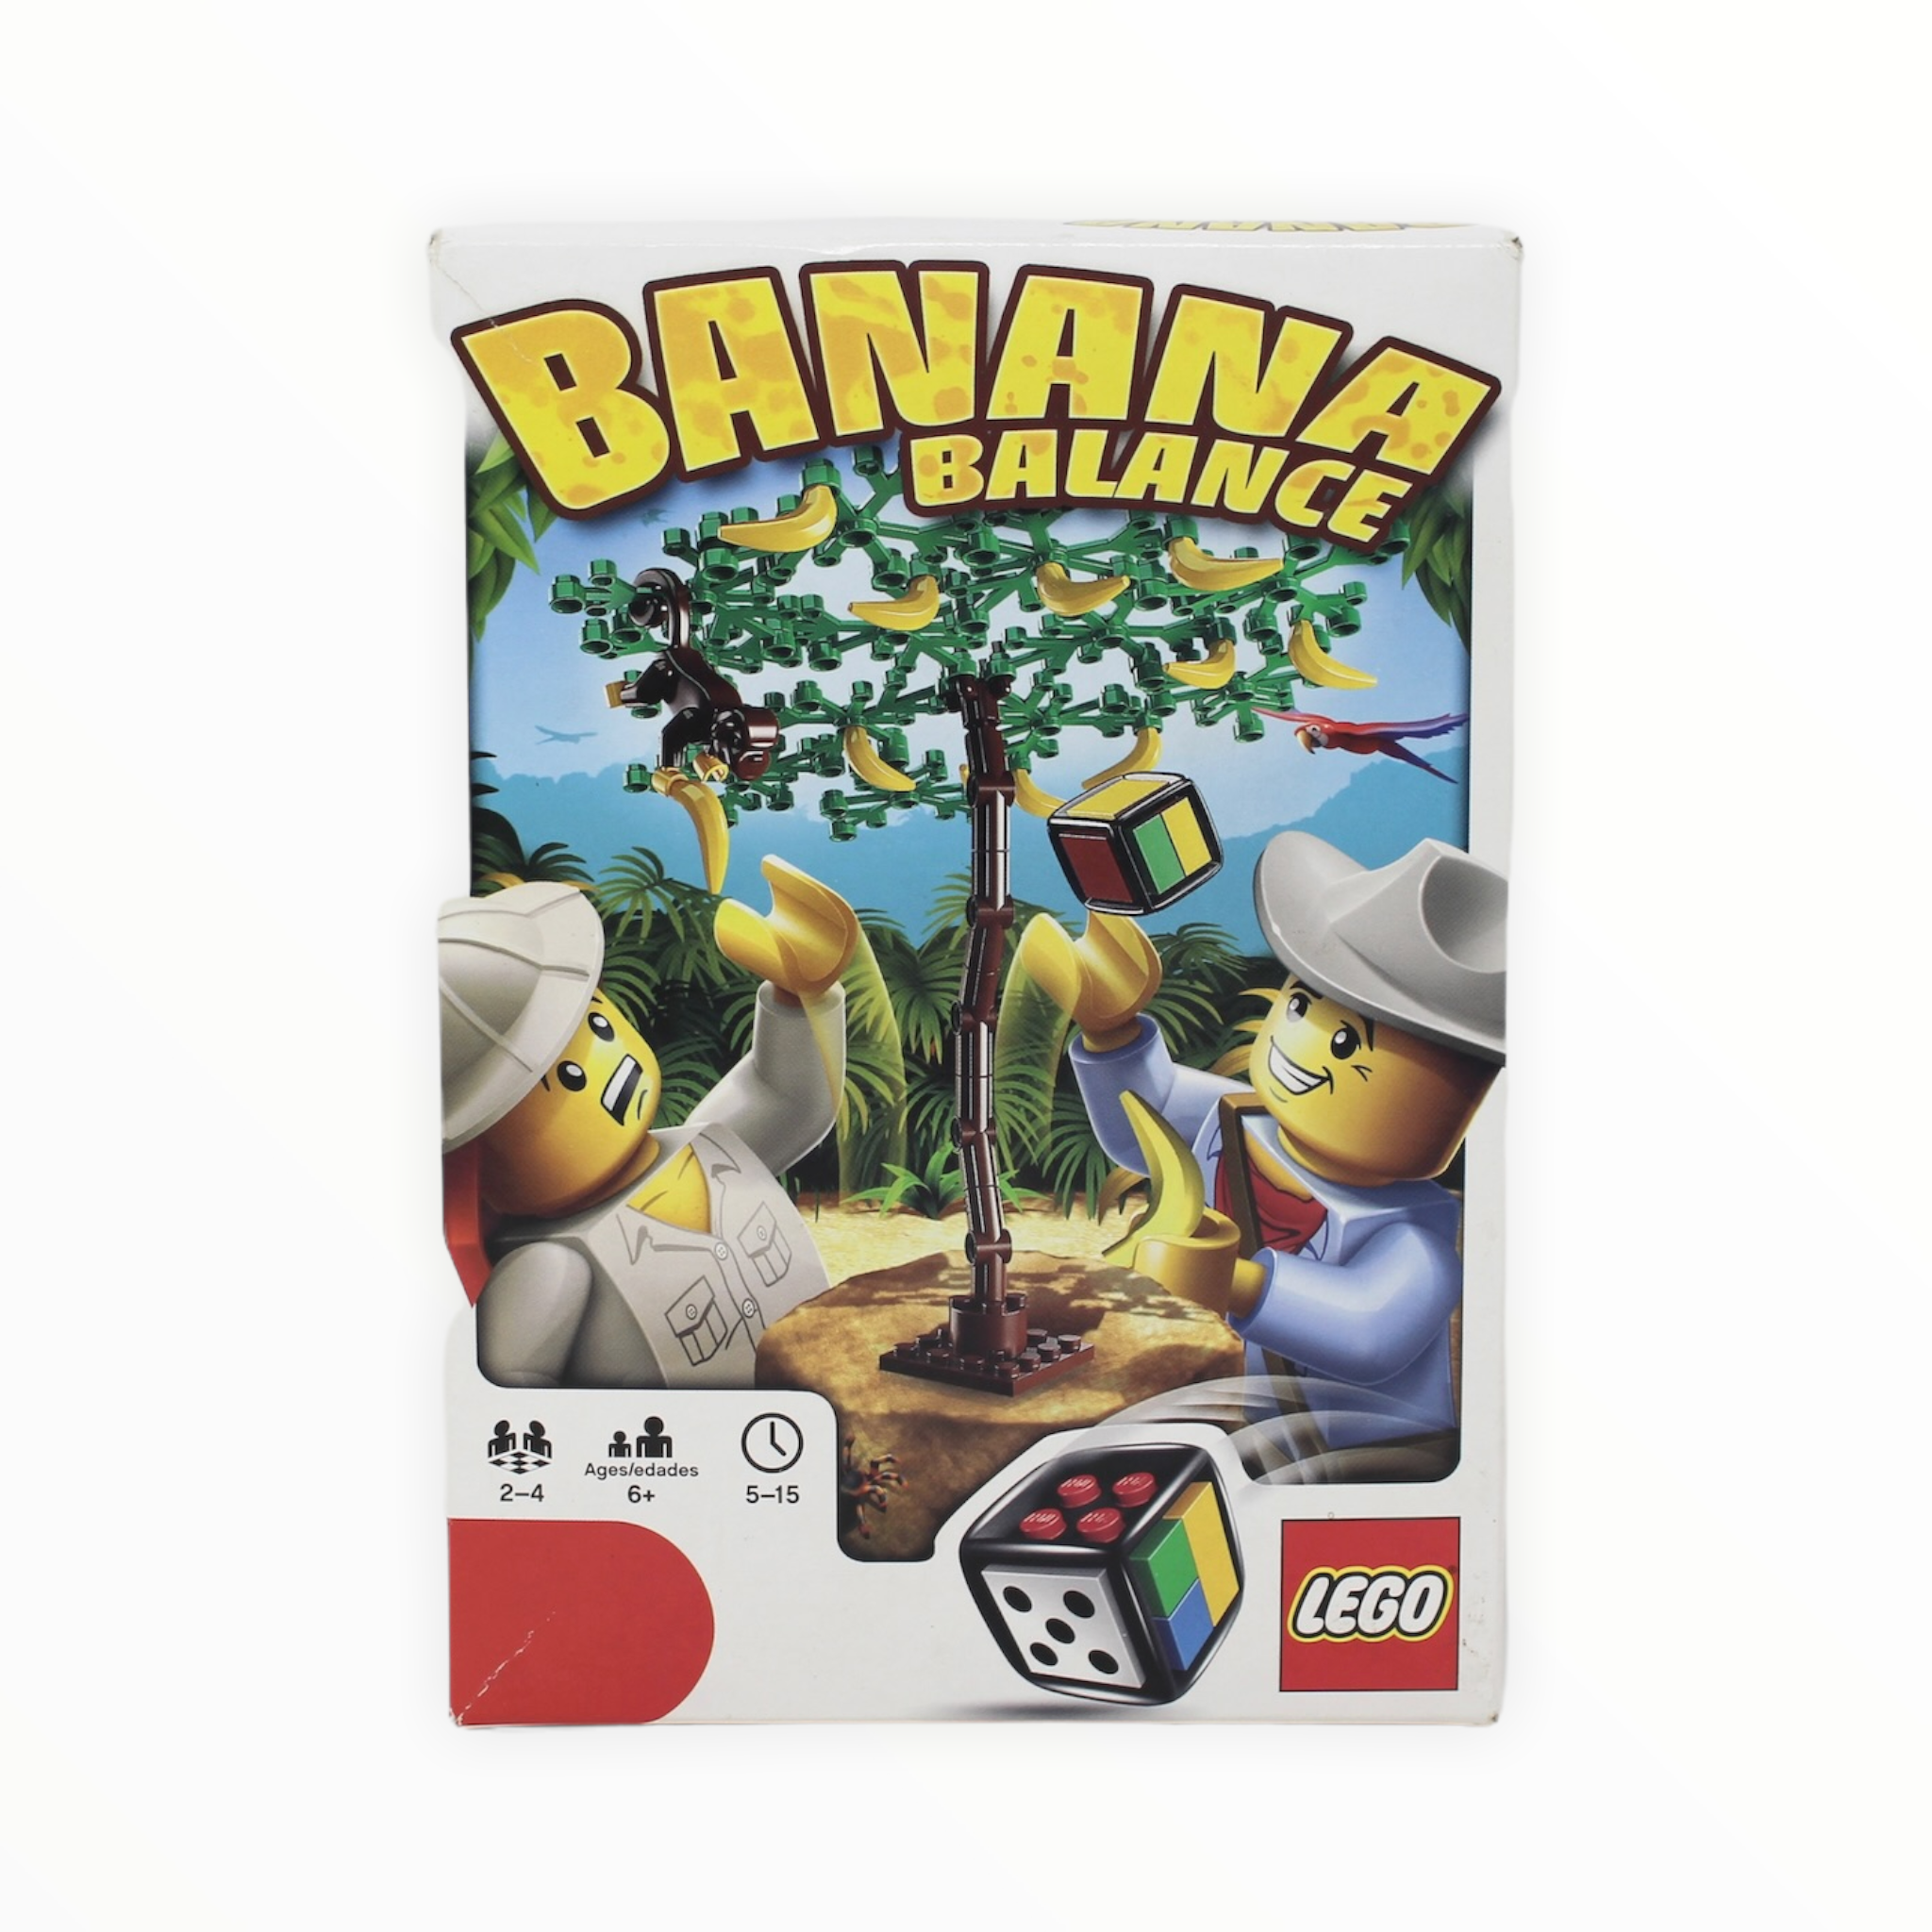 Certified Used Set 3853 LEGO Banana Balance